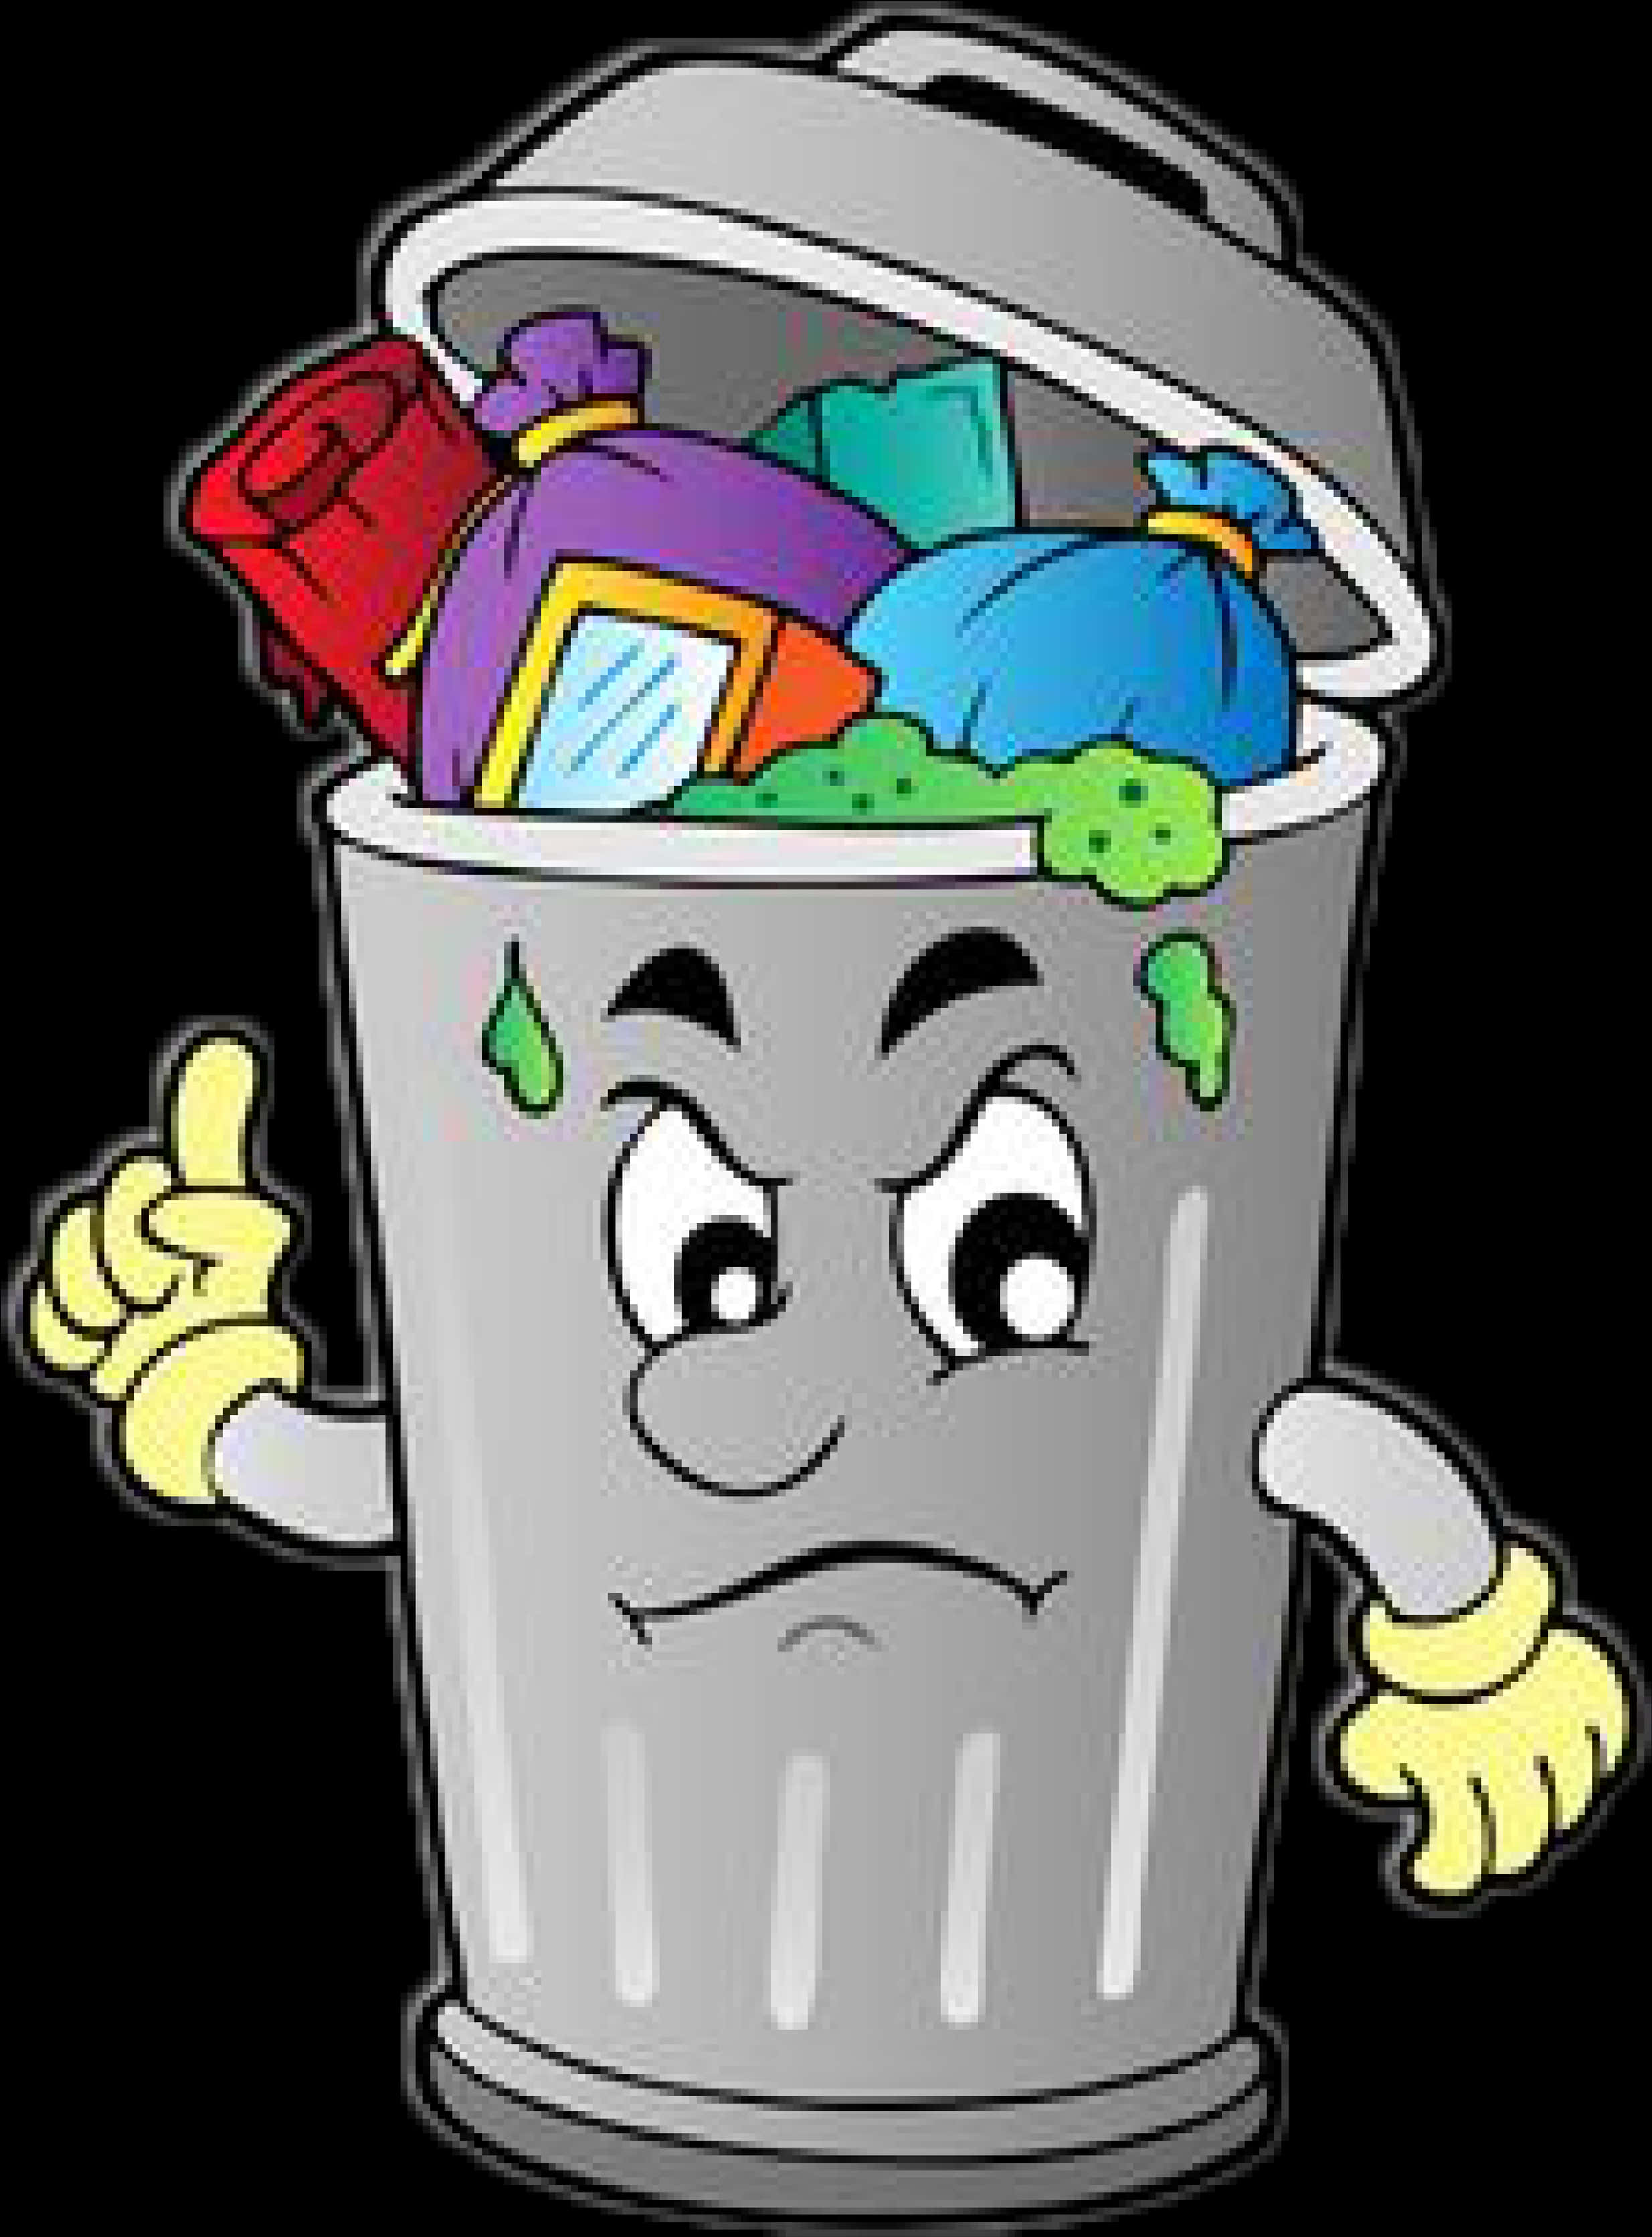 A Cartoon Of A Trash Can